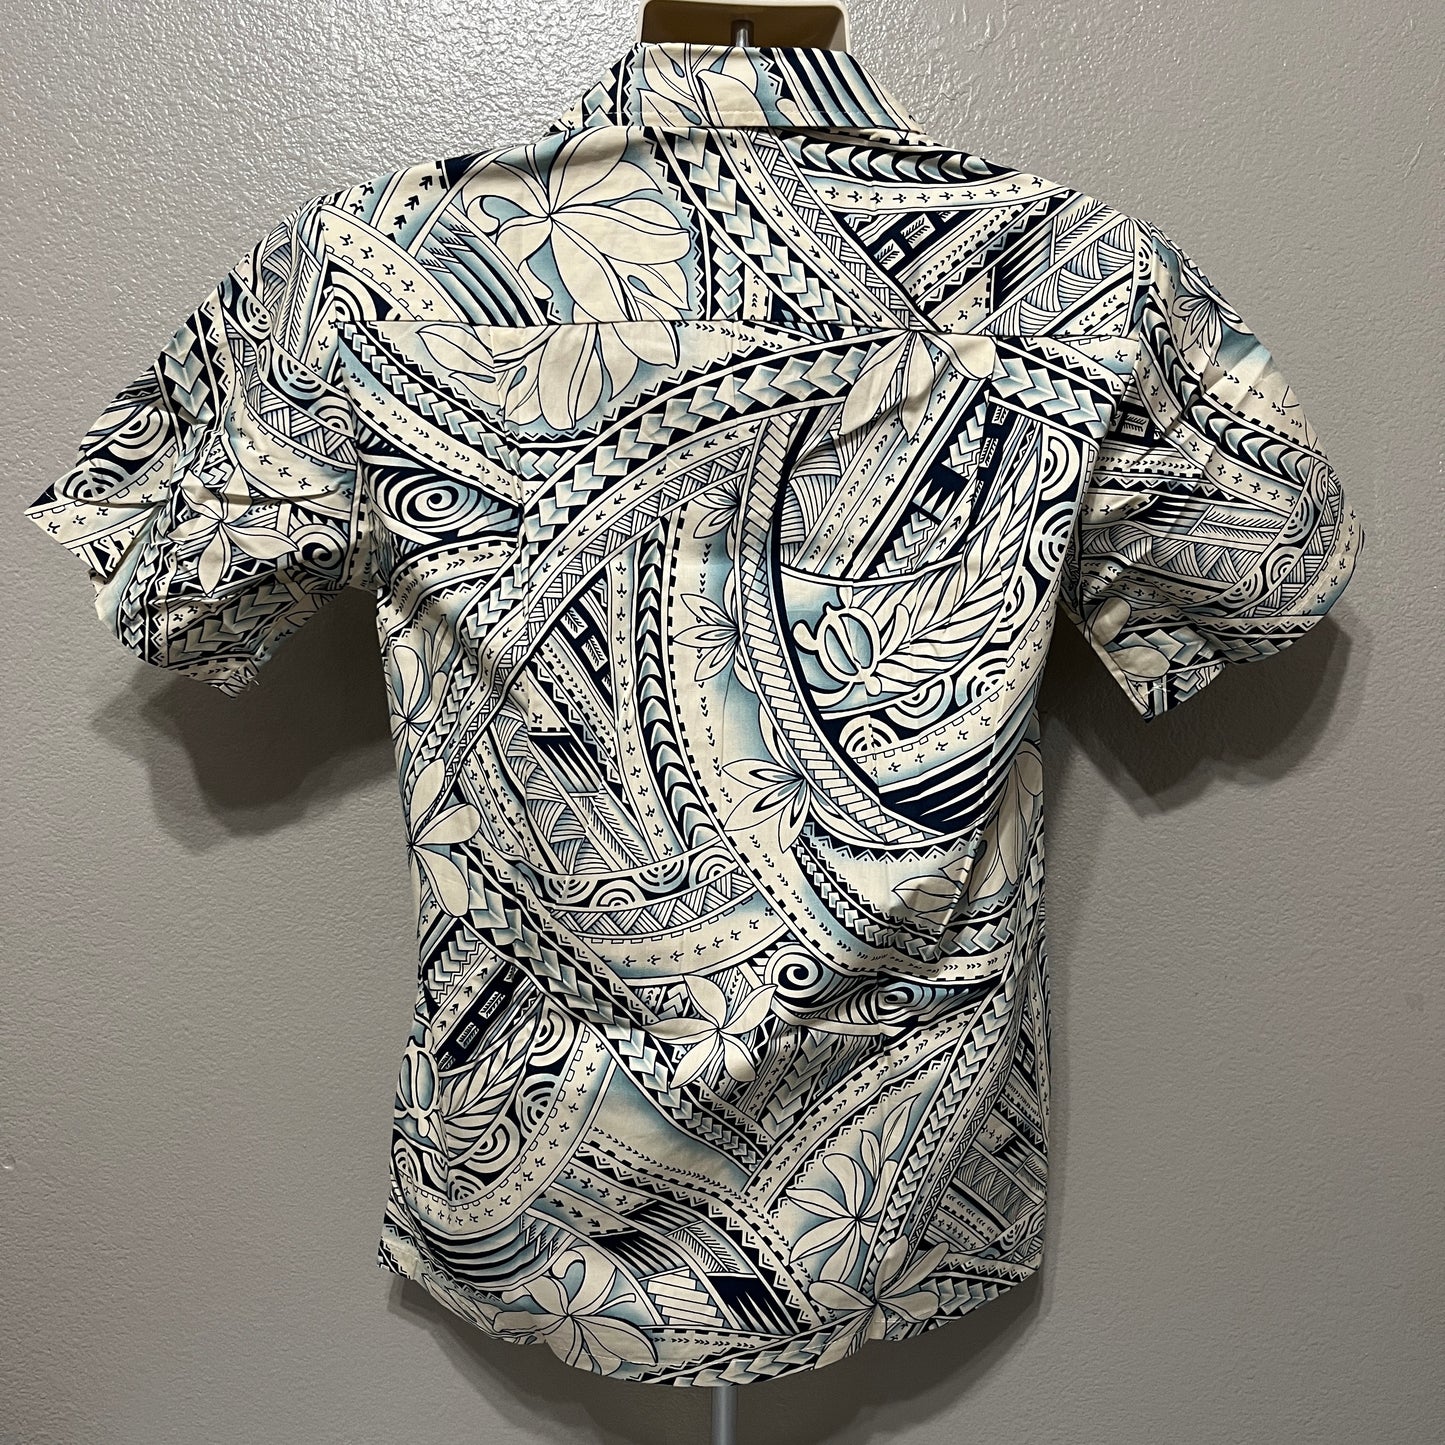 Detailed Tribal Aloha Shirt